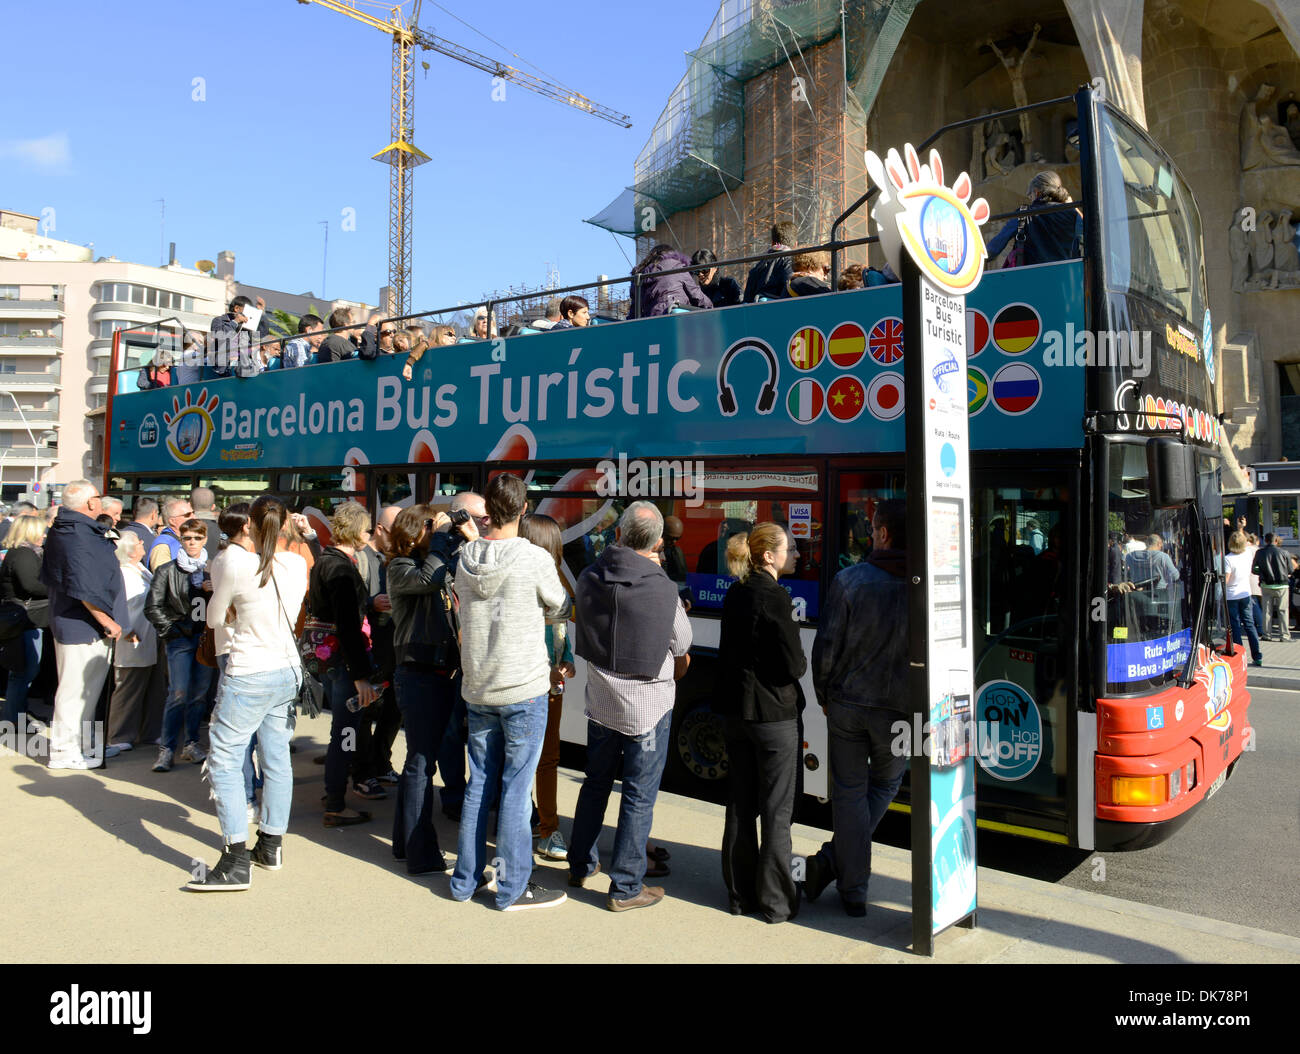 Barcelona Tourist bus, tourists queue for sightseeing tour bus, Barcelona, Spain Stock Photo